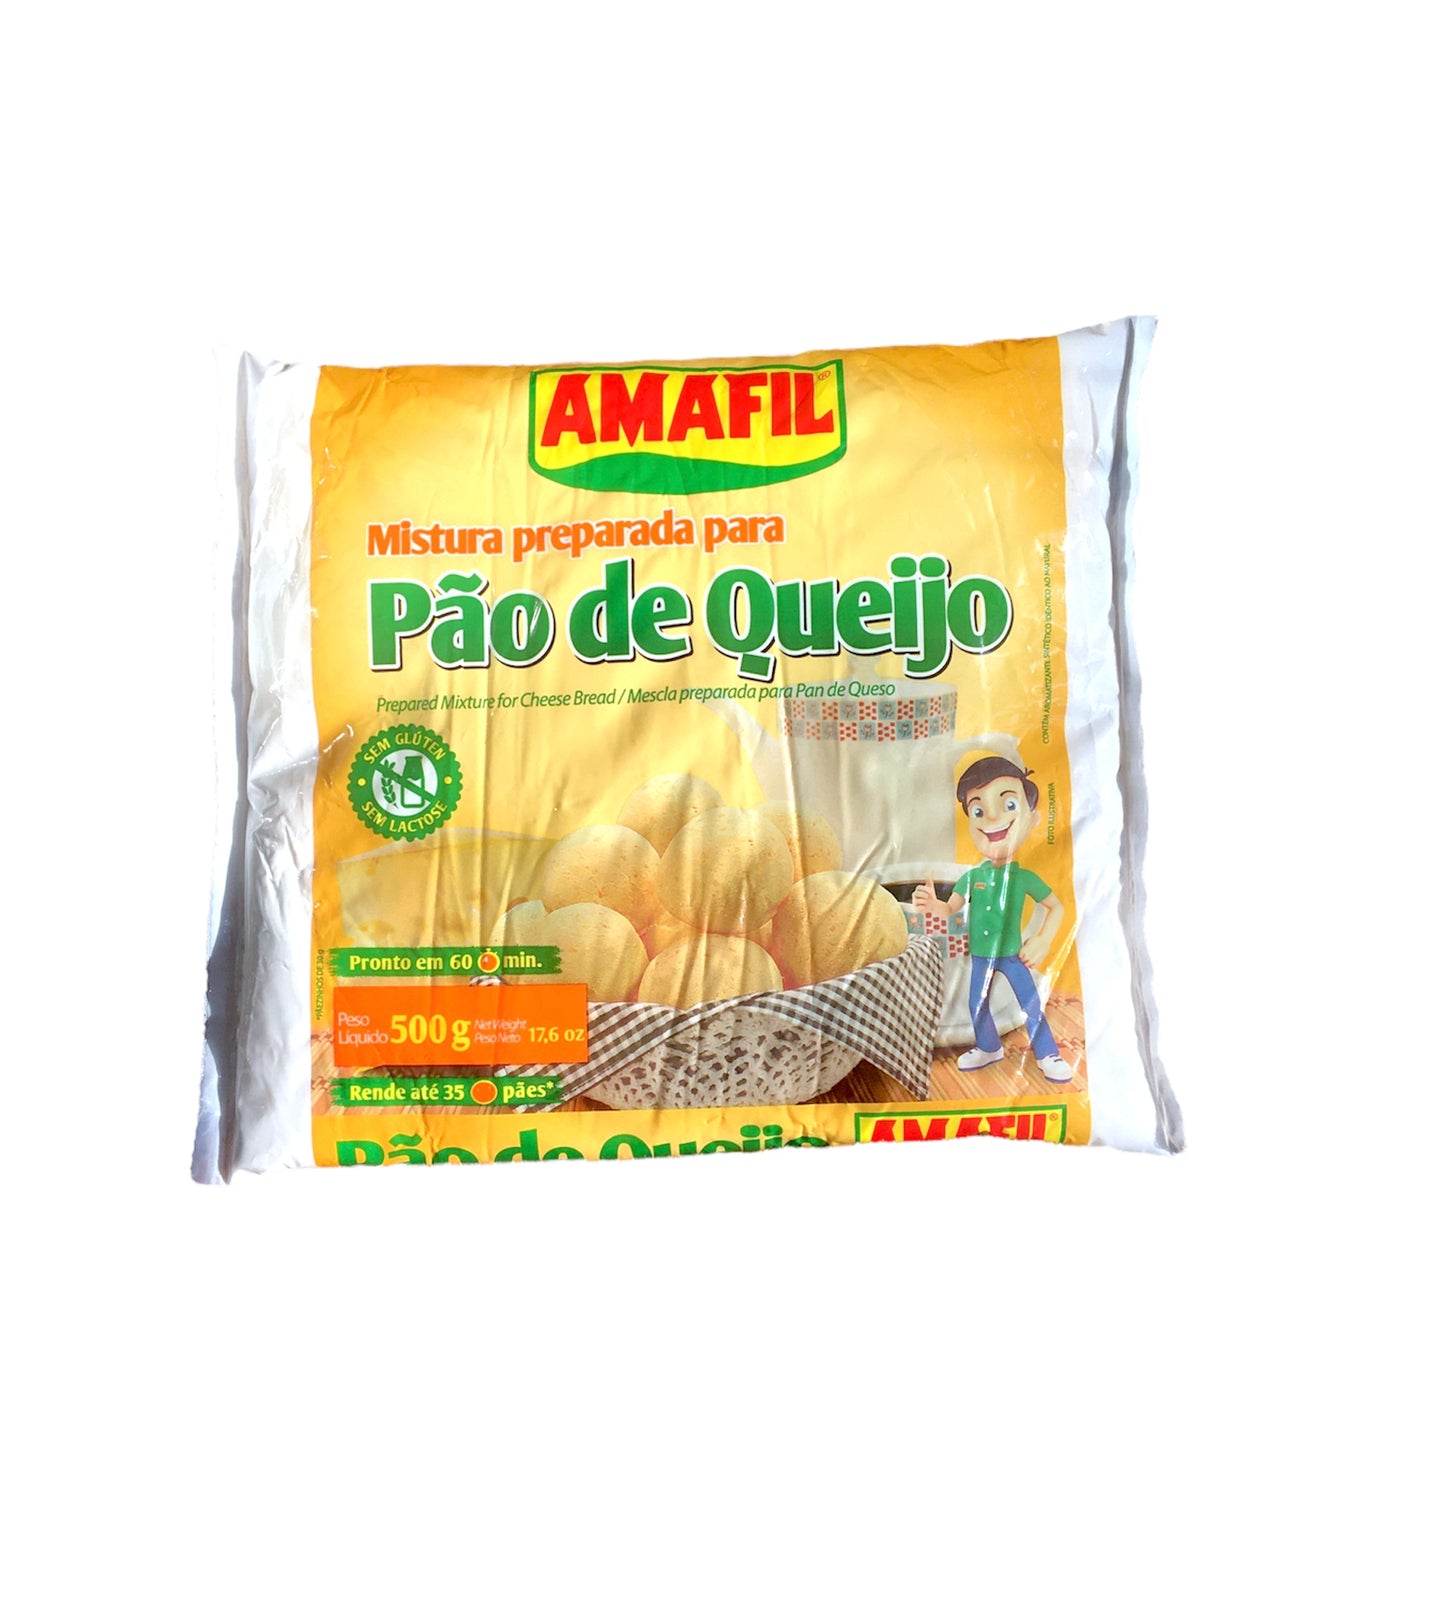 Amafil Cheese Bread Mix | Mistura para Pao de Queijo Amafil